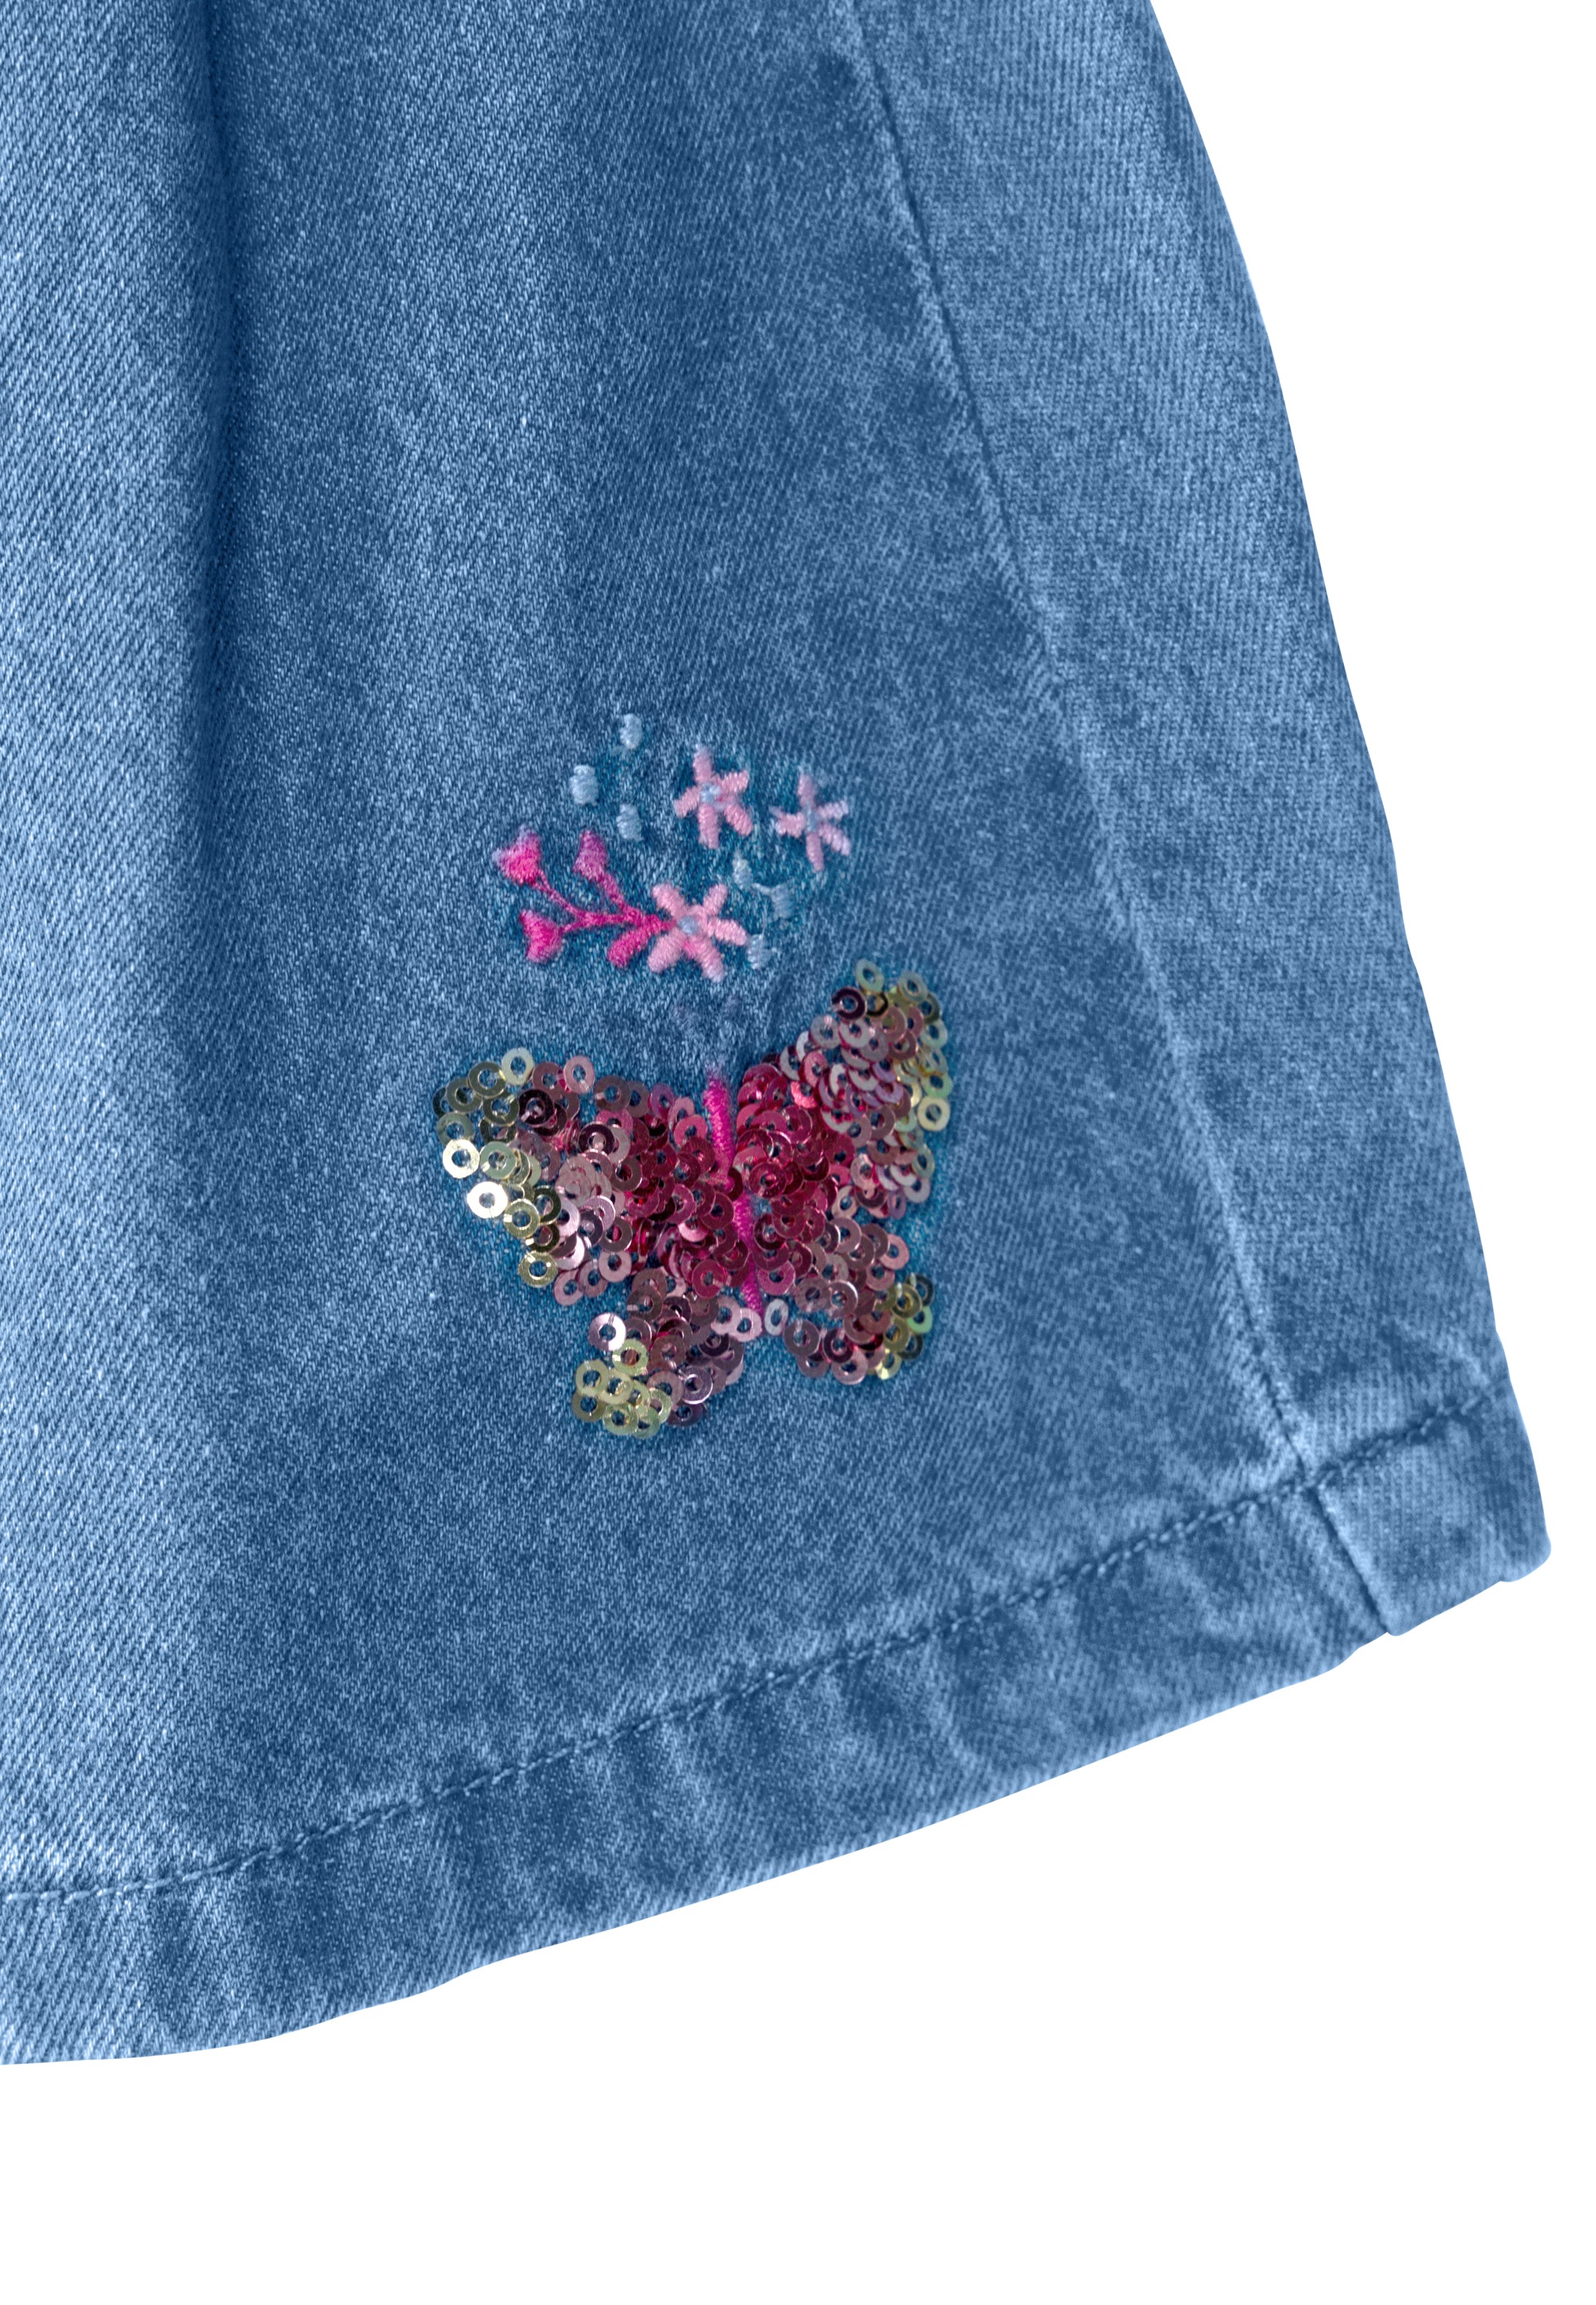 SALT AND PEPPER Shorts »Fancy«, mit Schmetterling aus Pailletten